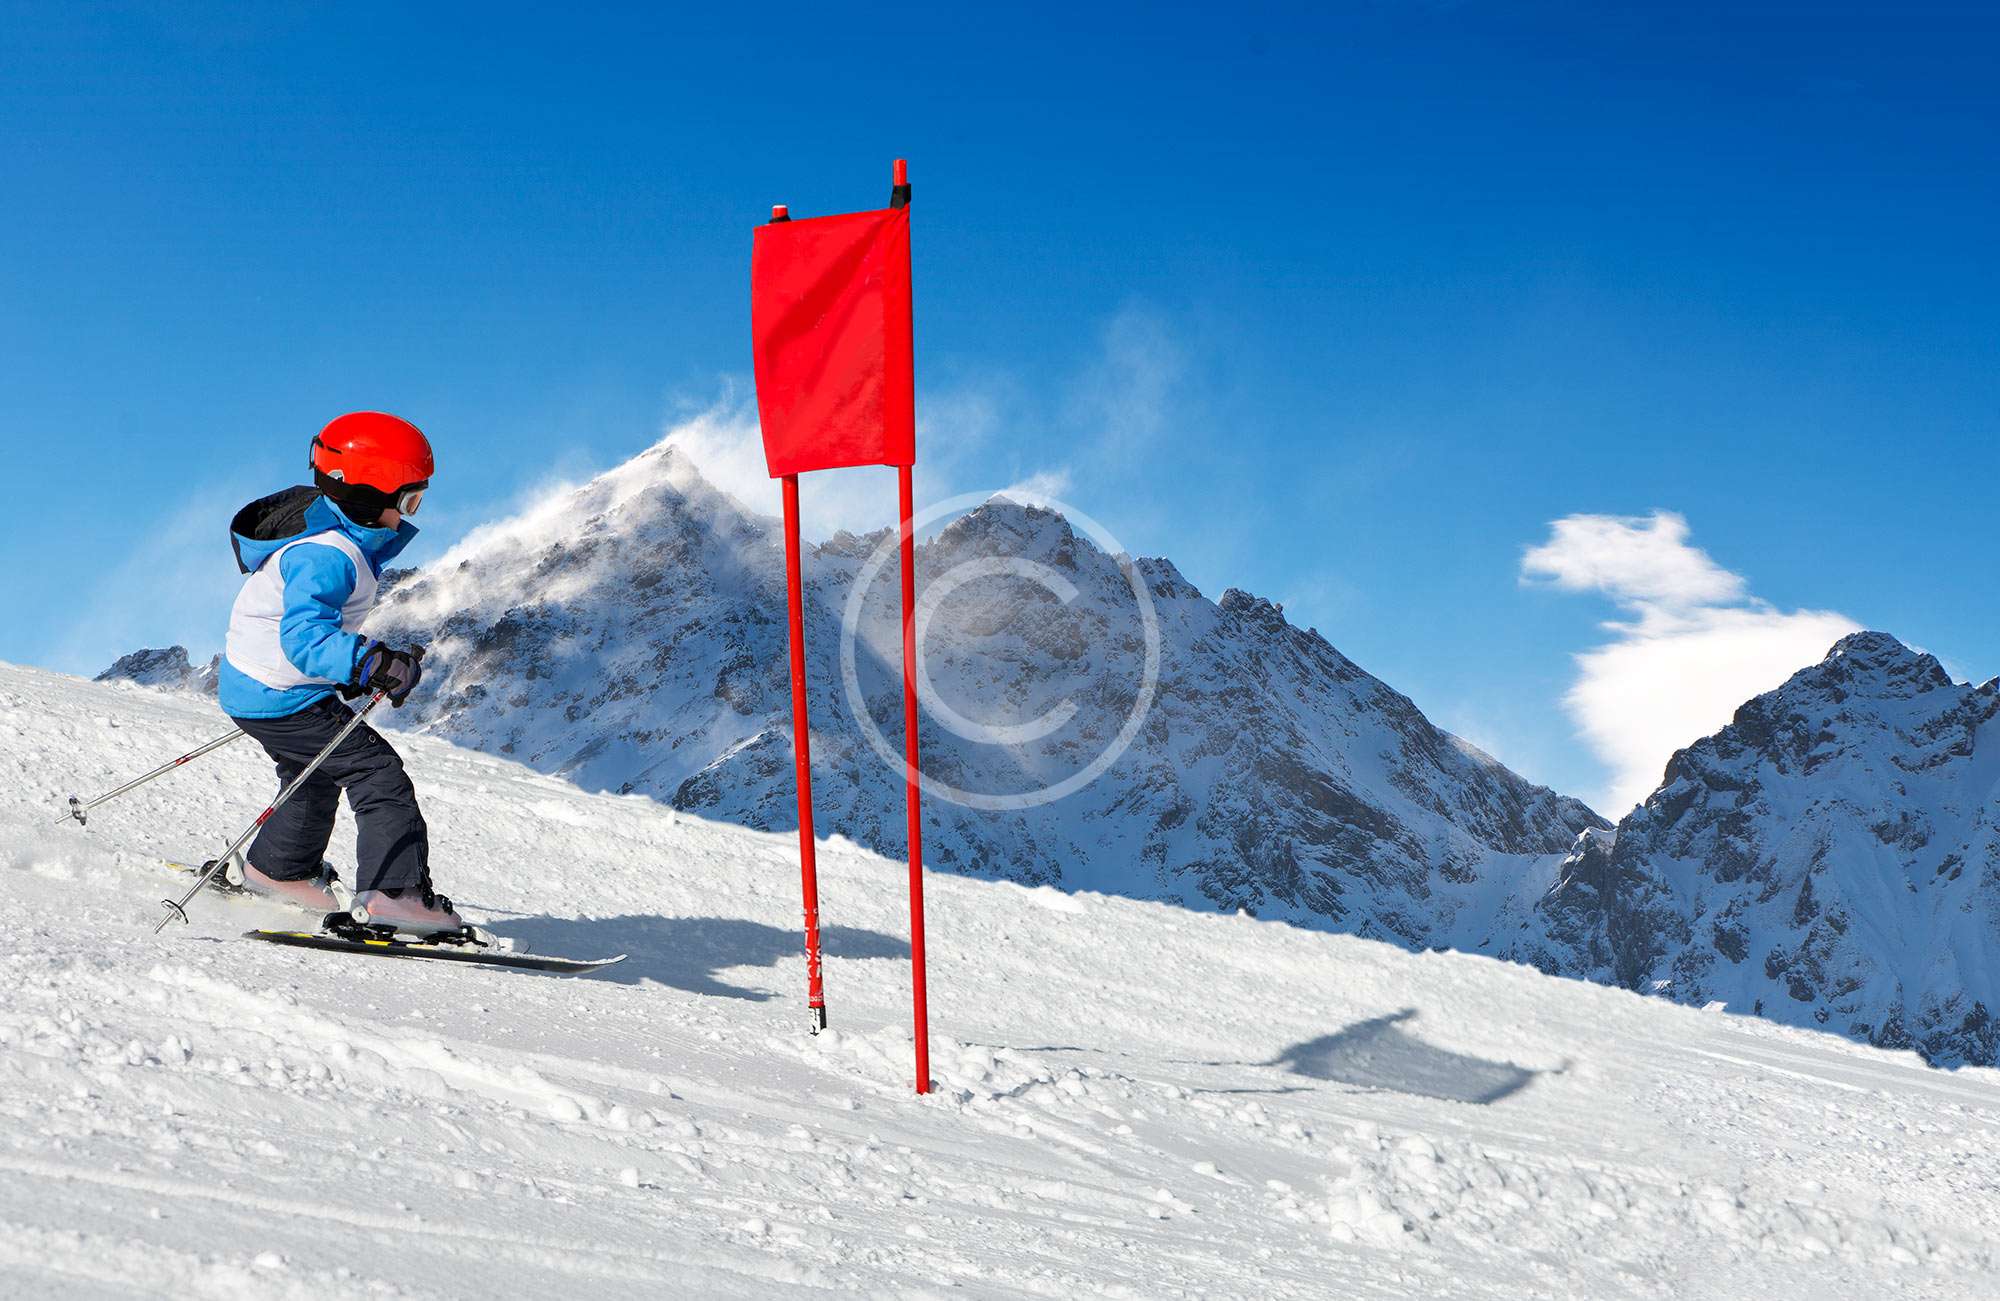 The Top Ten Ski Resorts in the World